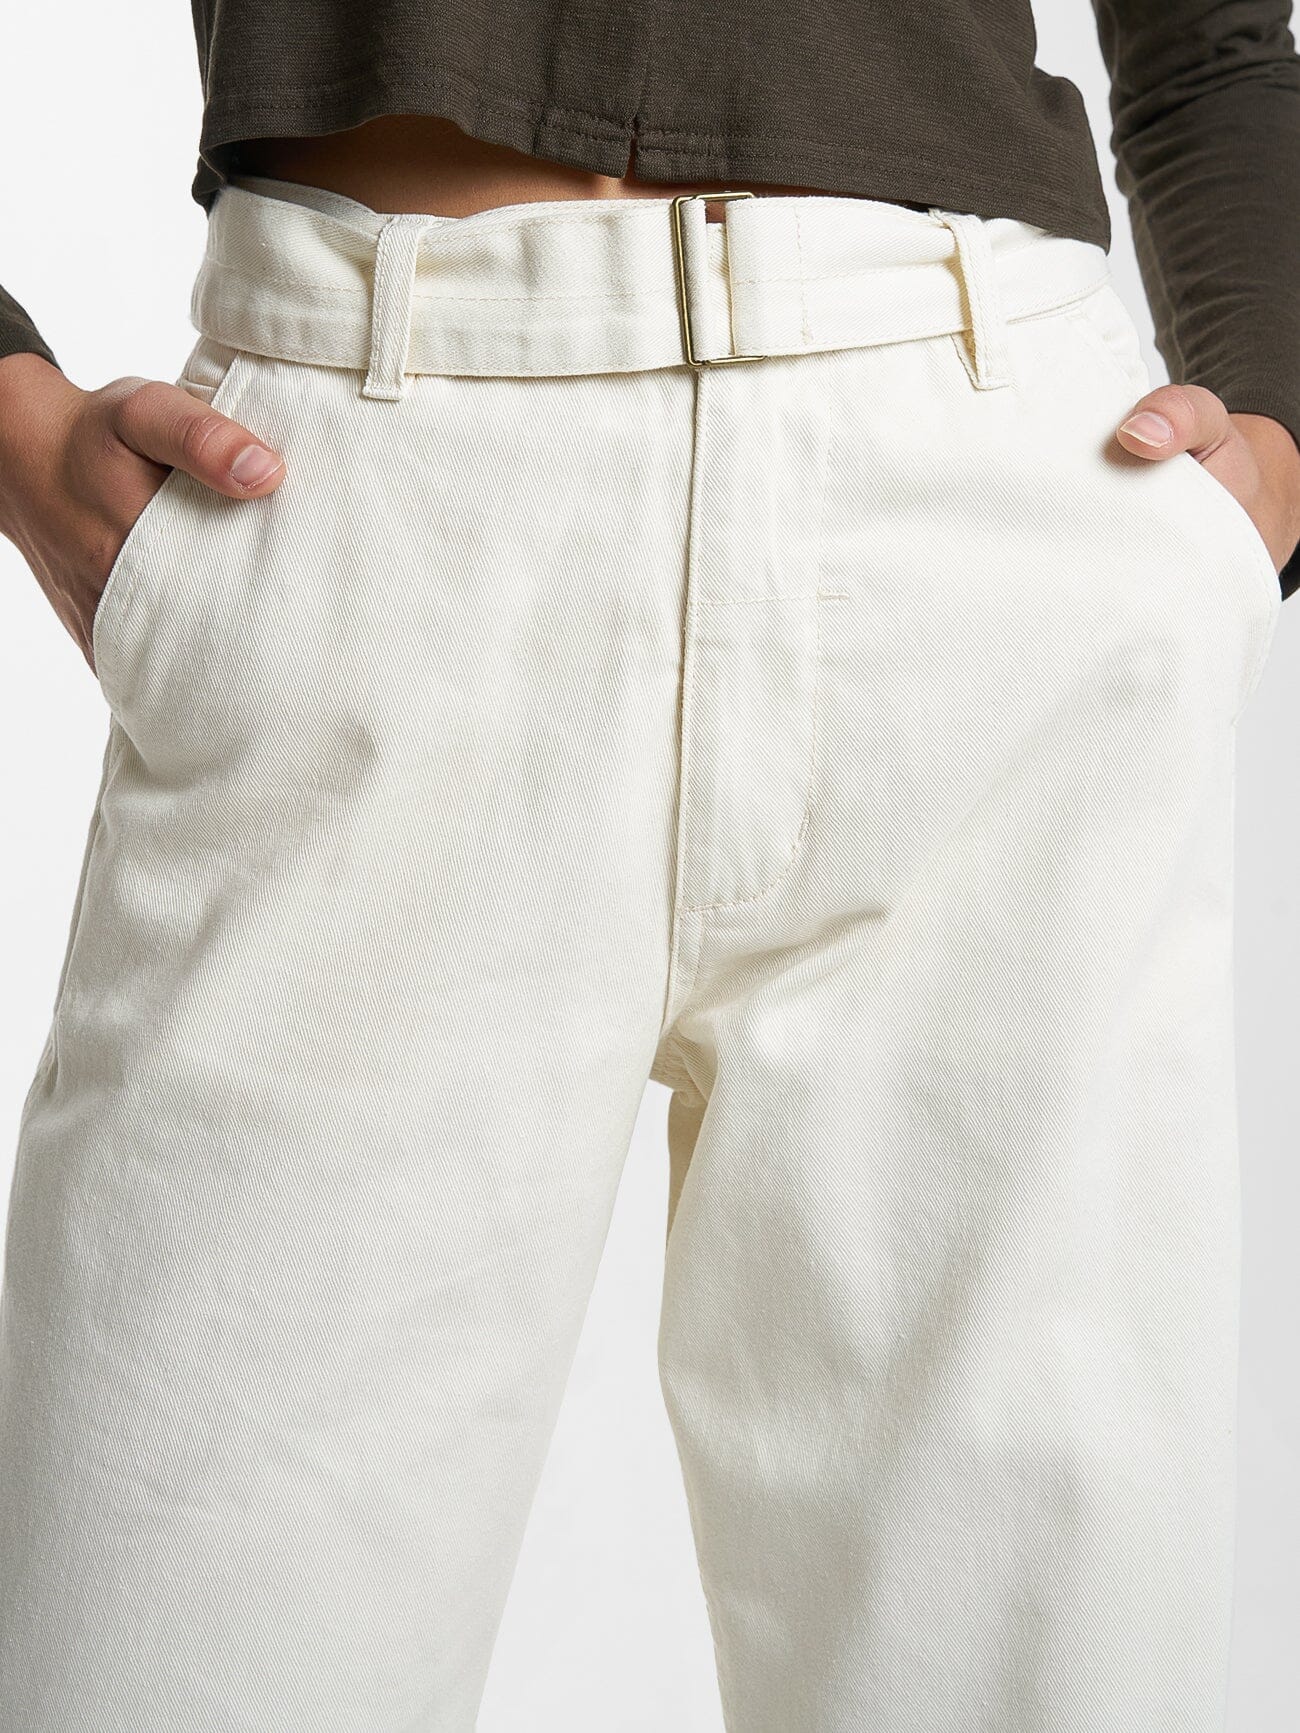 Tether Pant - Heritage White